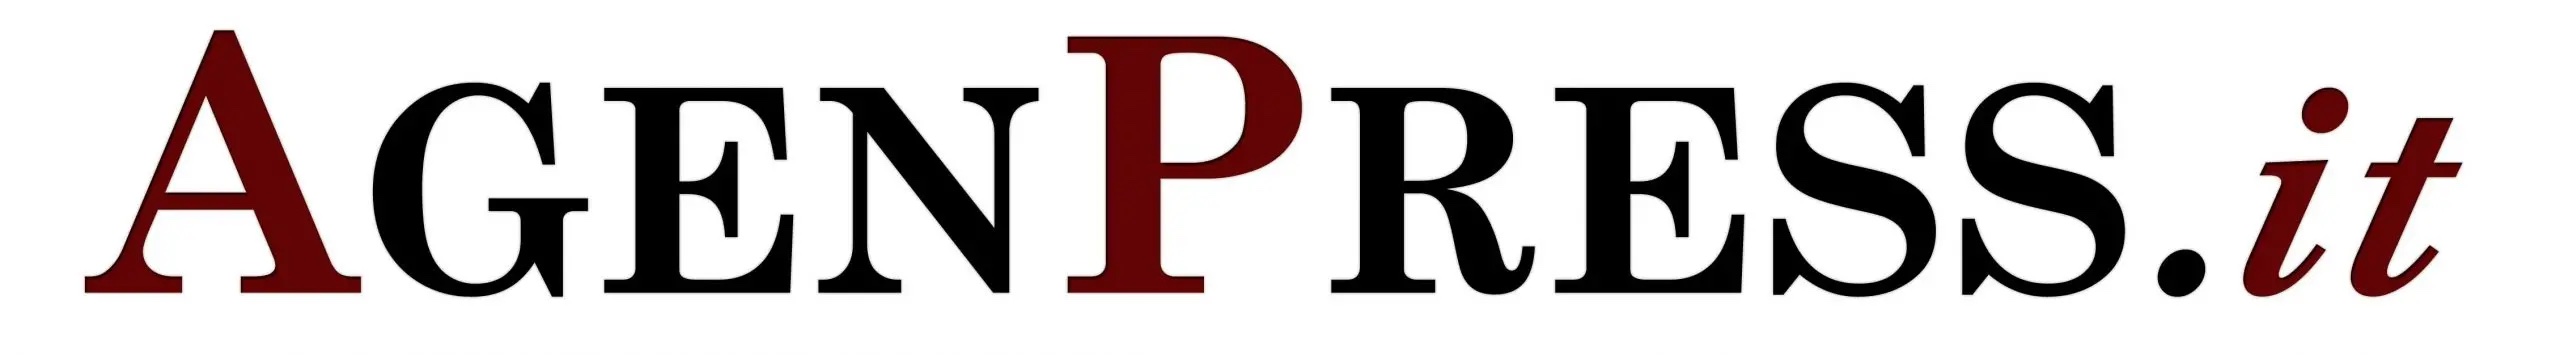 Agenpress-logo-scaled